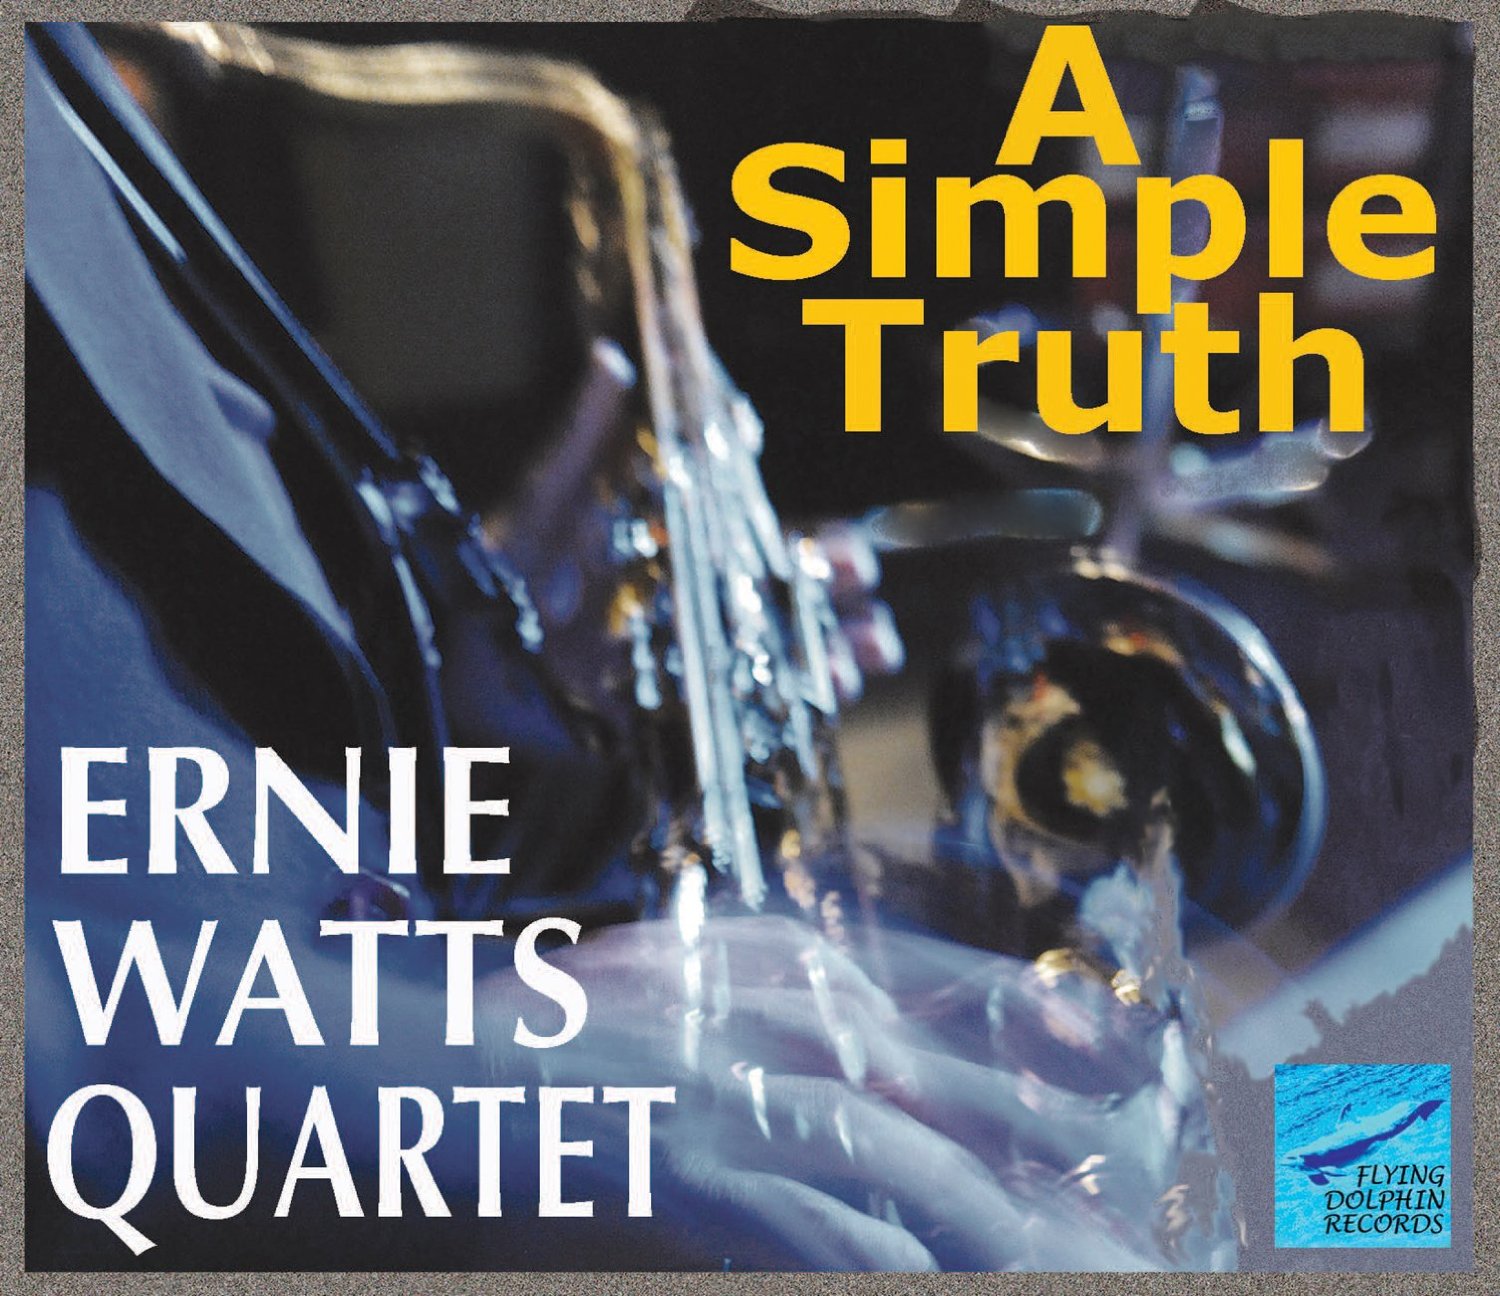 ERNIE WATTS - A Simple Truth cover 